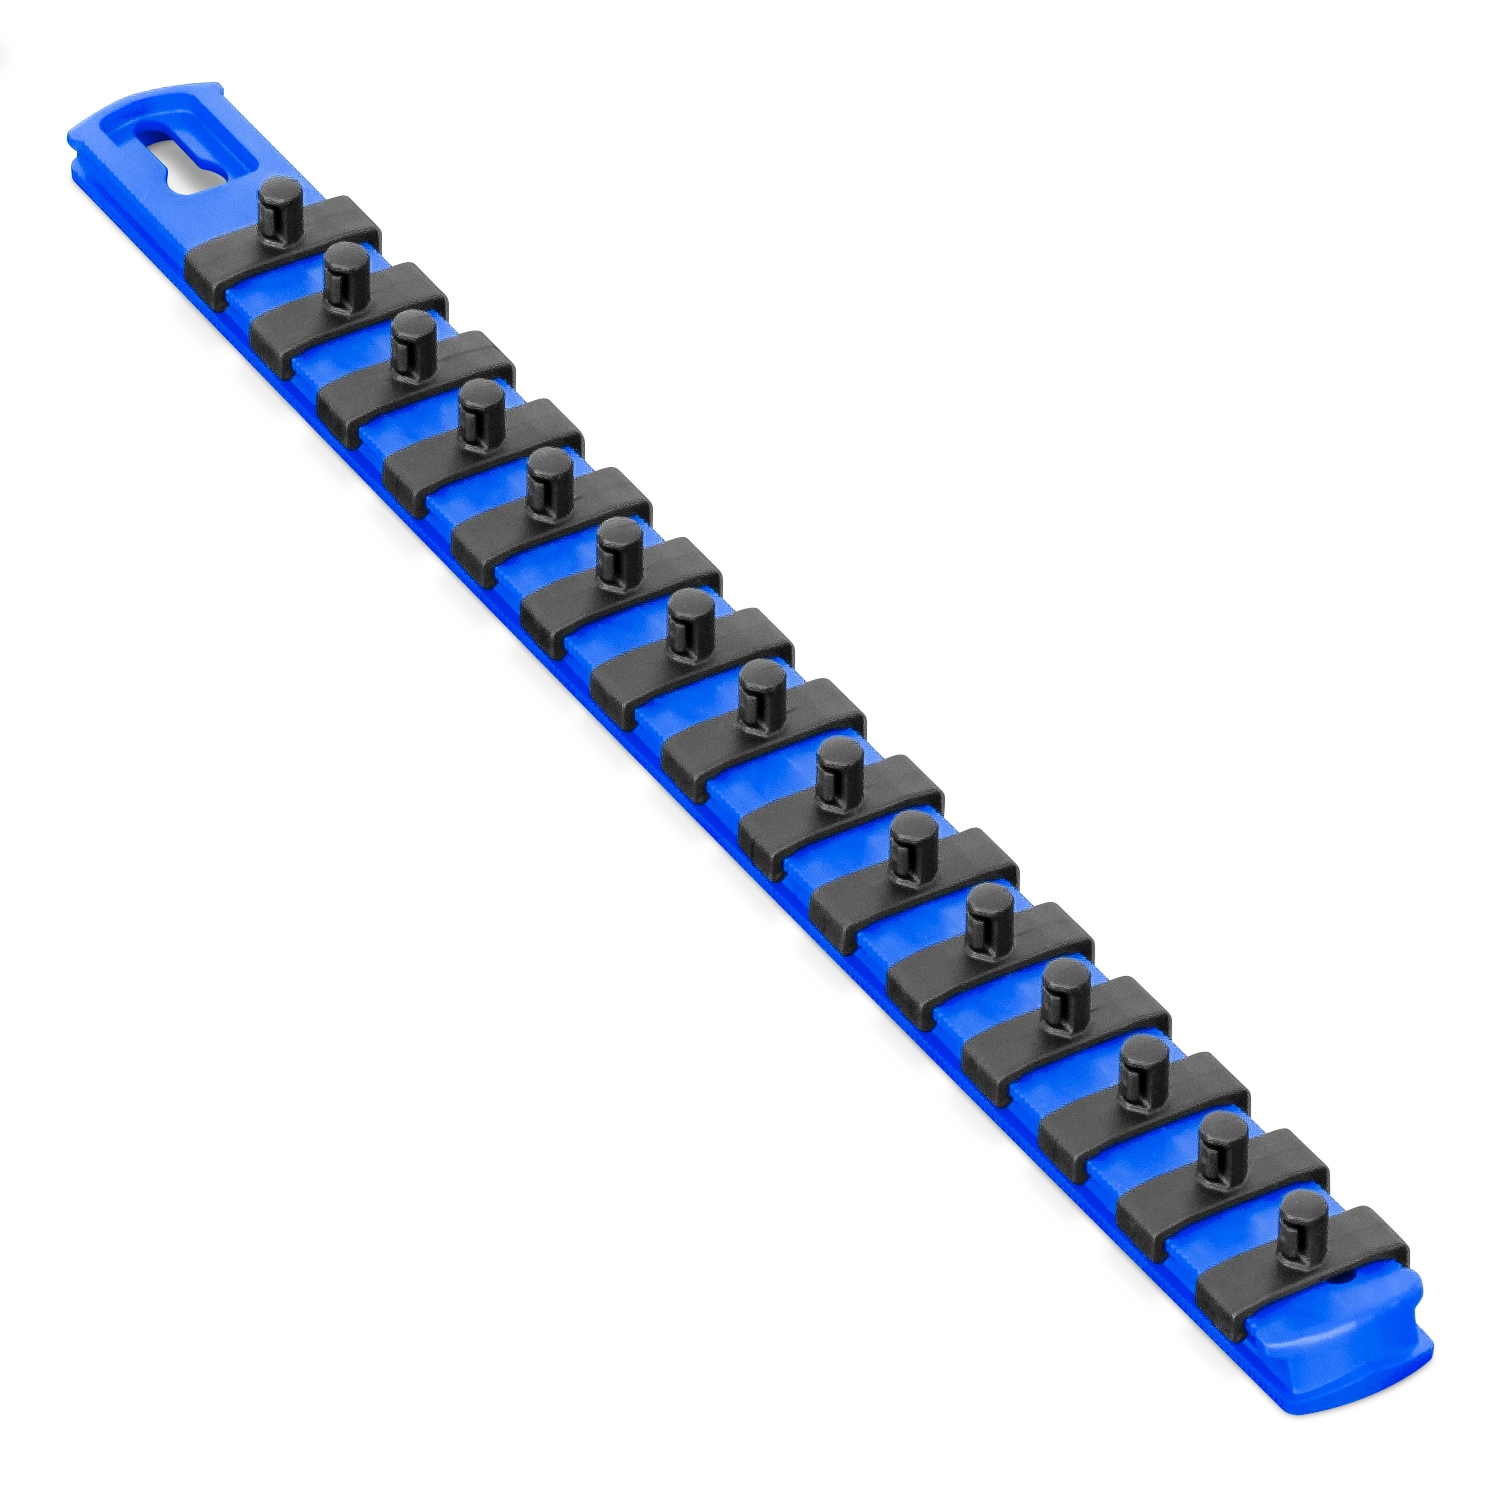 1/2" Drive Socket Rail Storage Holder Organiser with 14 Clips per Rail